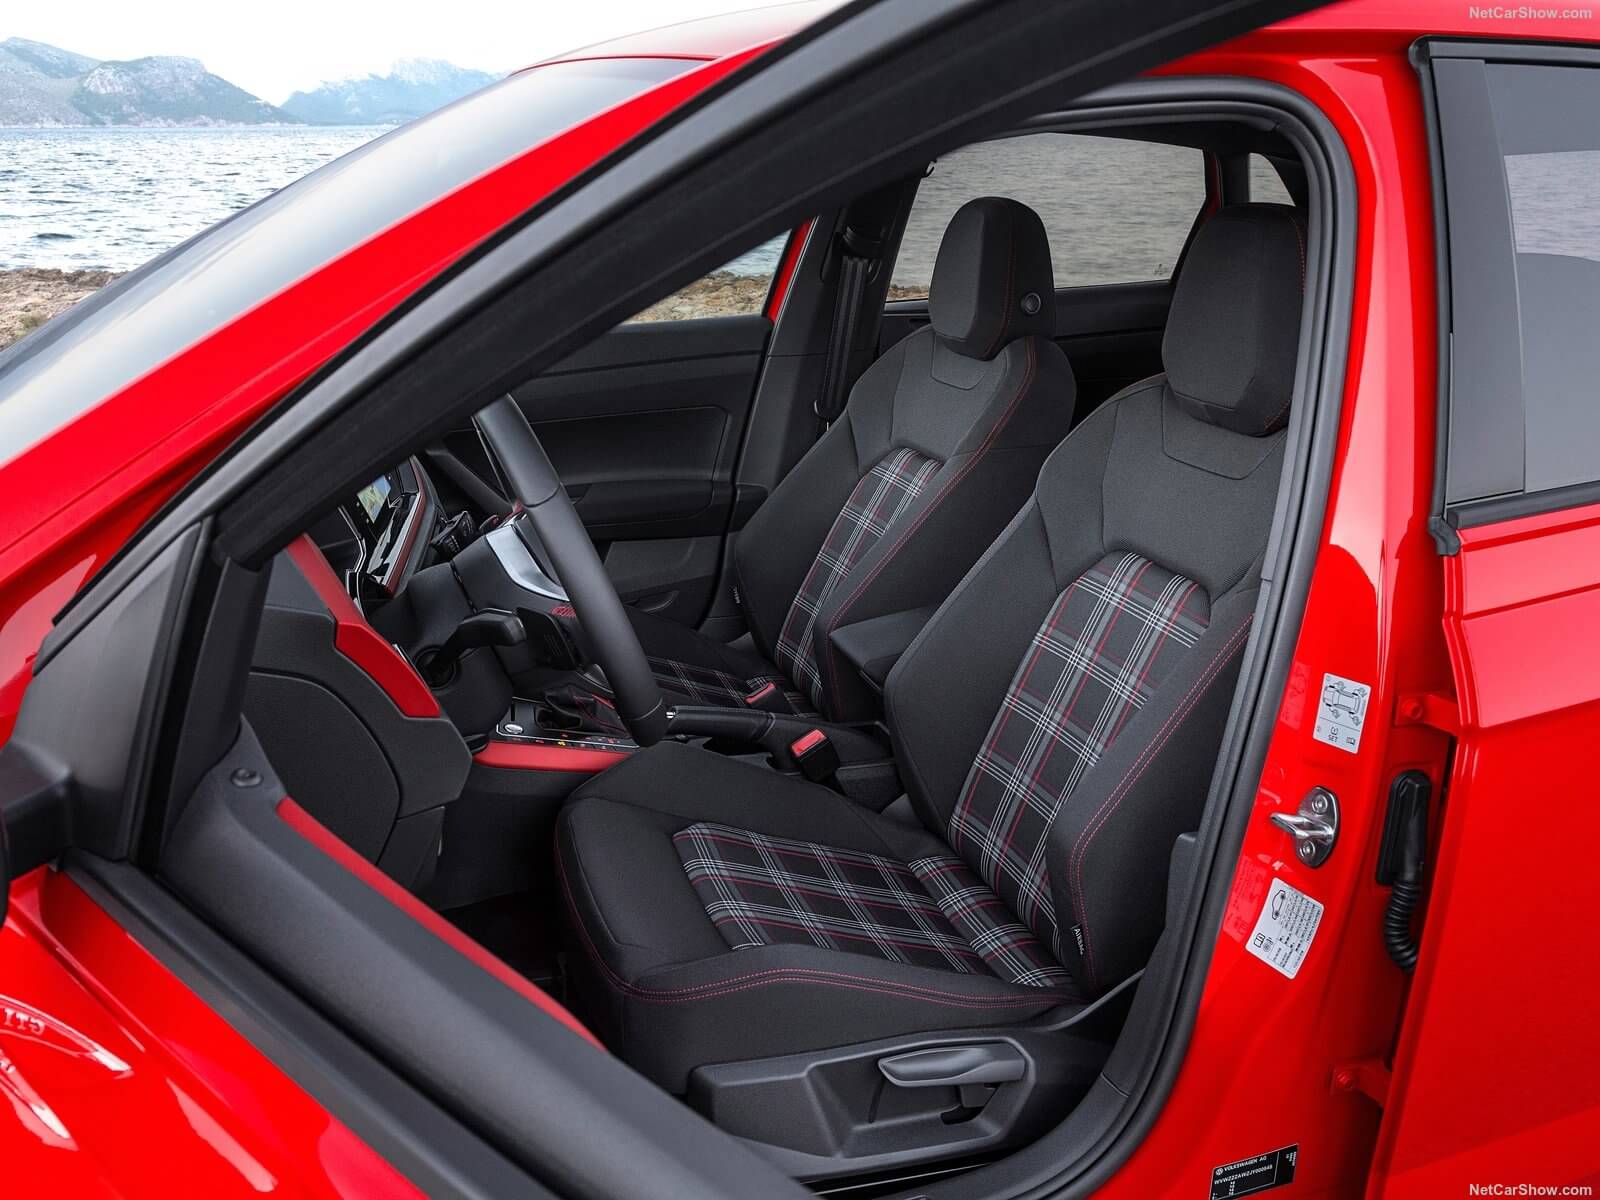  Volkswagen Polo GTI tem interior com bancos tartã